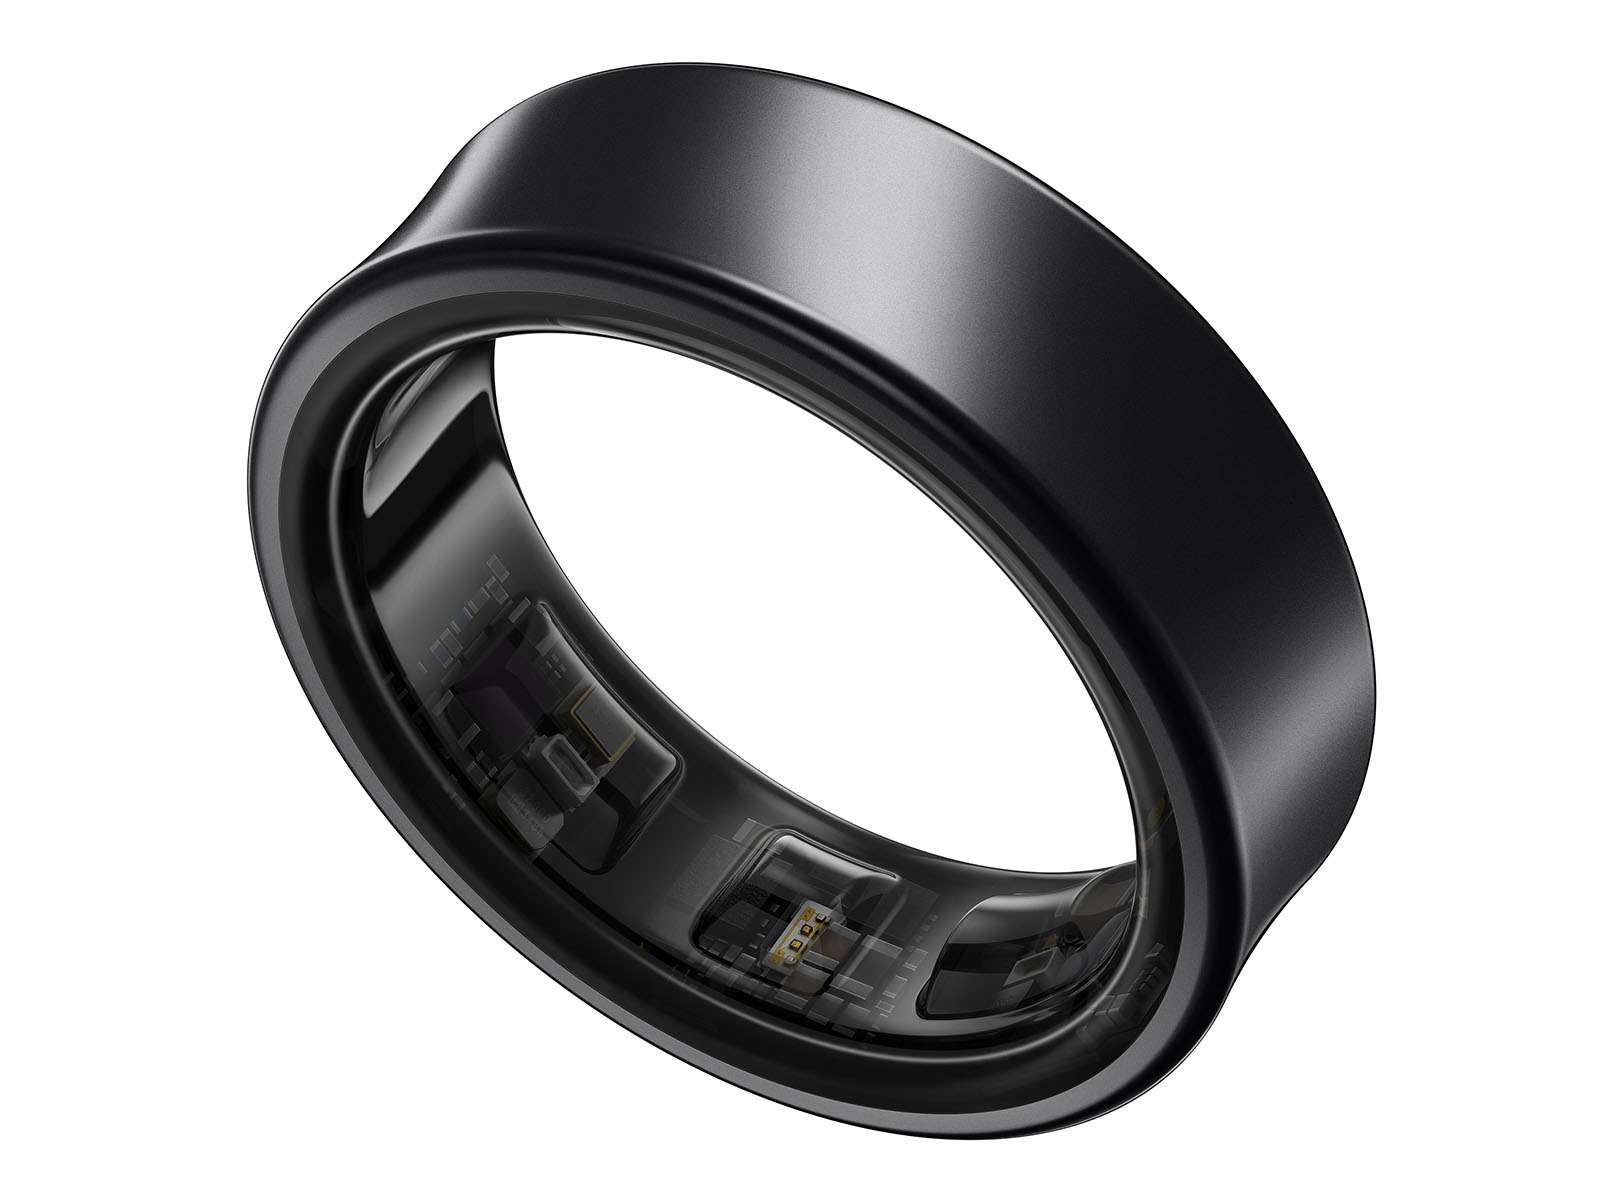 Thumbnail image of Galaxy Ring, Size 7, Titanium Black